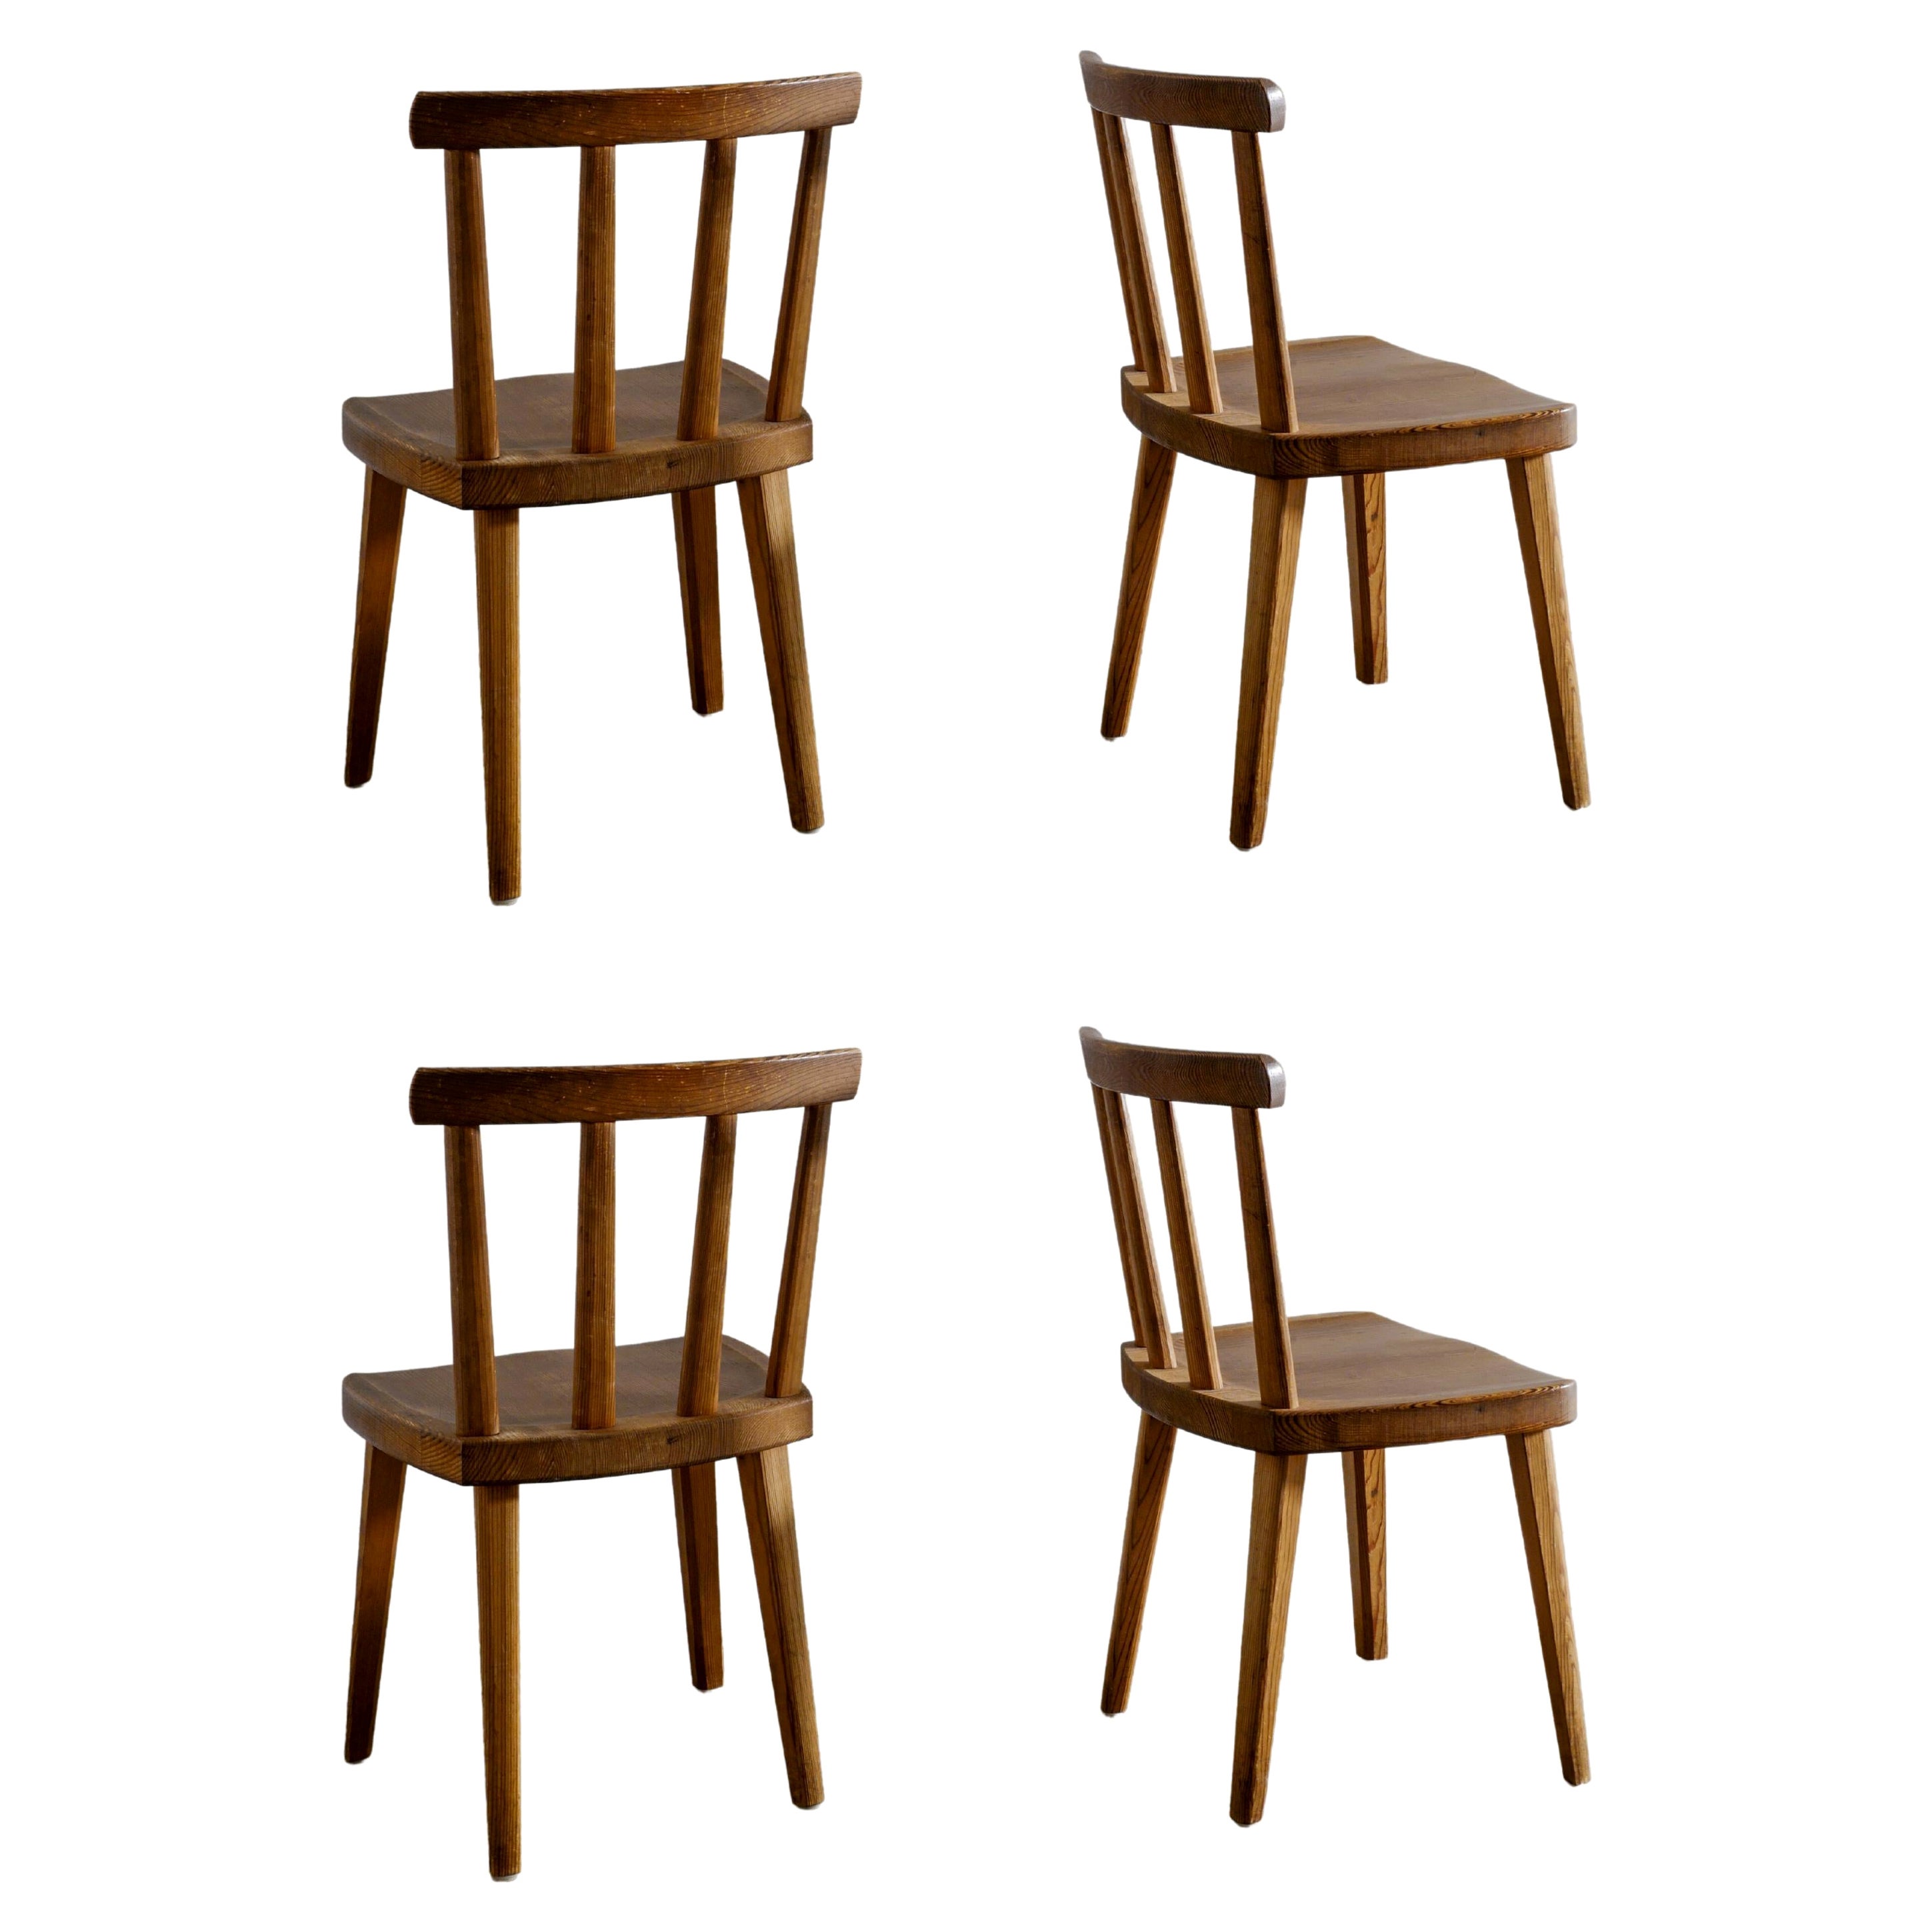 Set of Four Utö Chairs in Pine by Axel Einar Hjorth for Nordiska Kompaniet 1930s